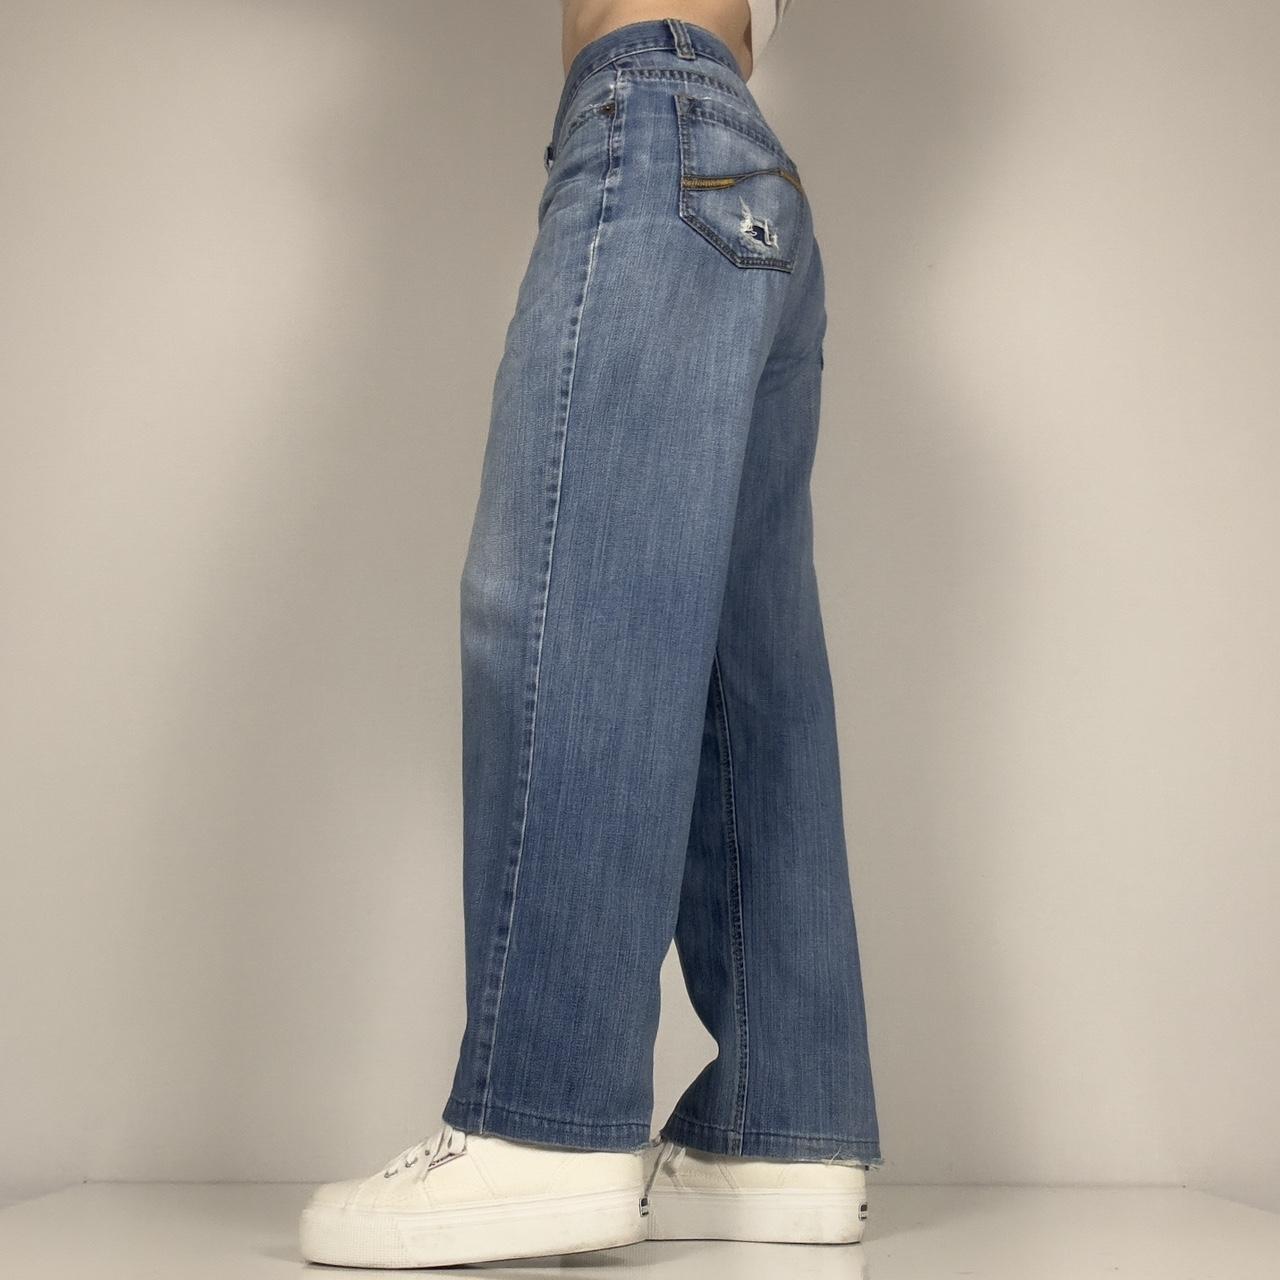 DKNY Men's Blue Jeans (3)